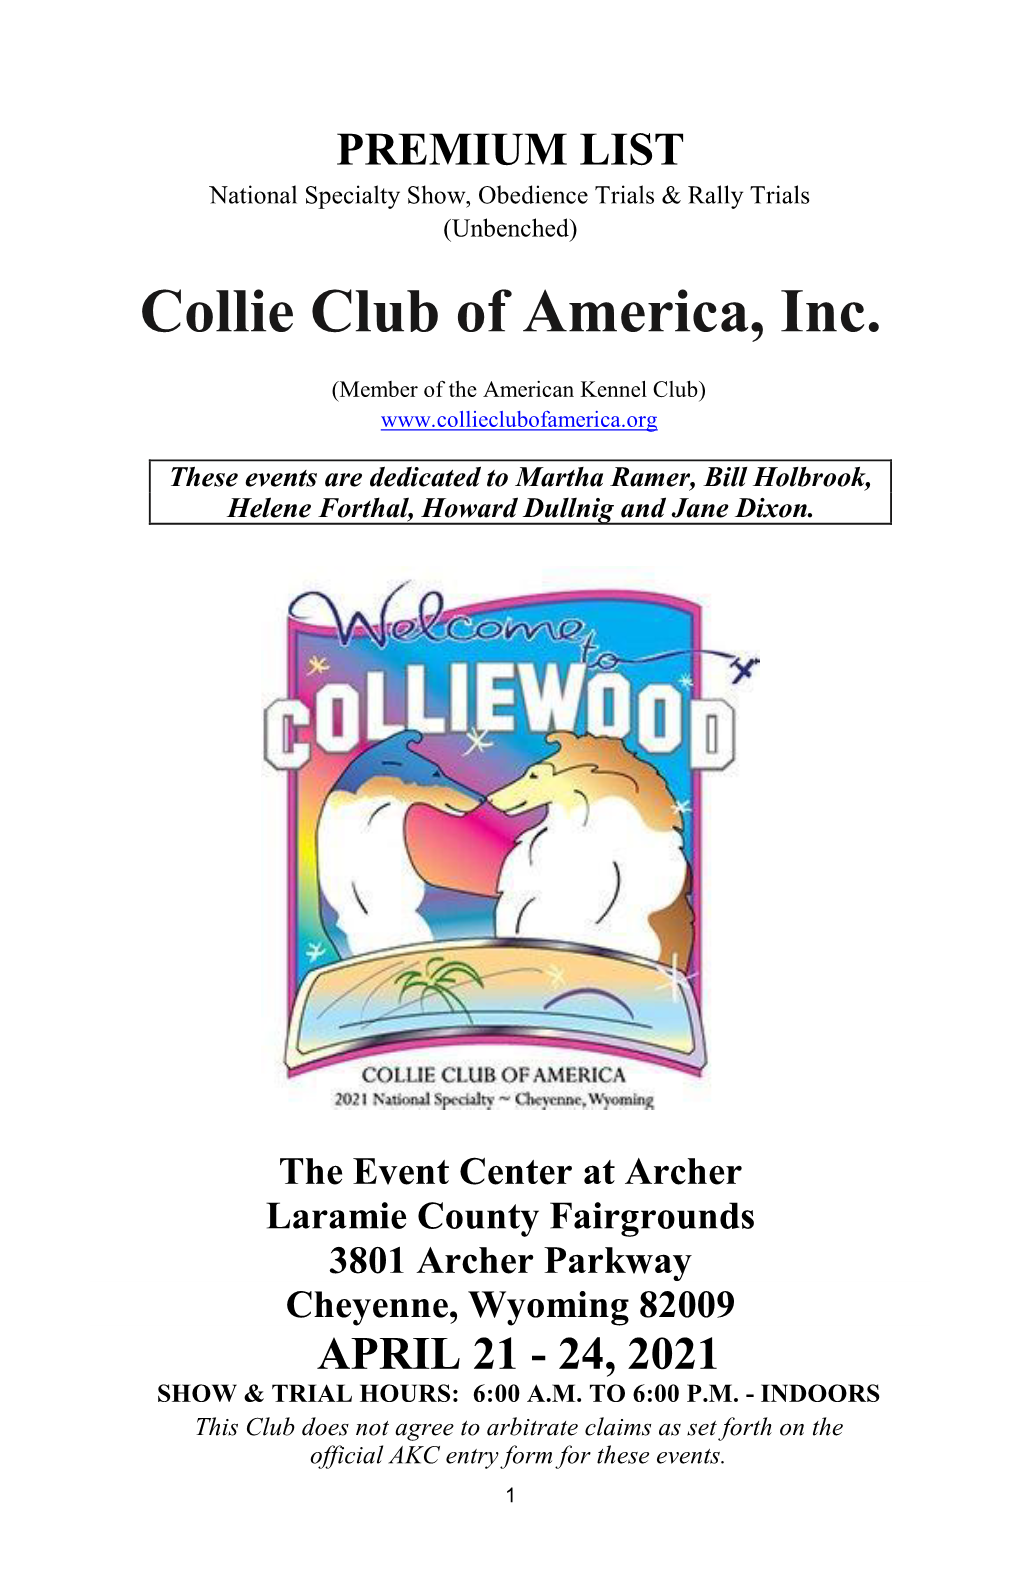 Collie Club of America, Inc